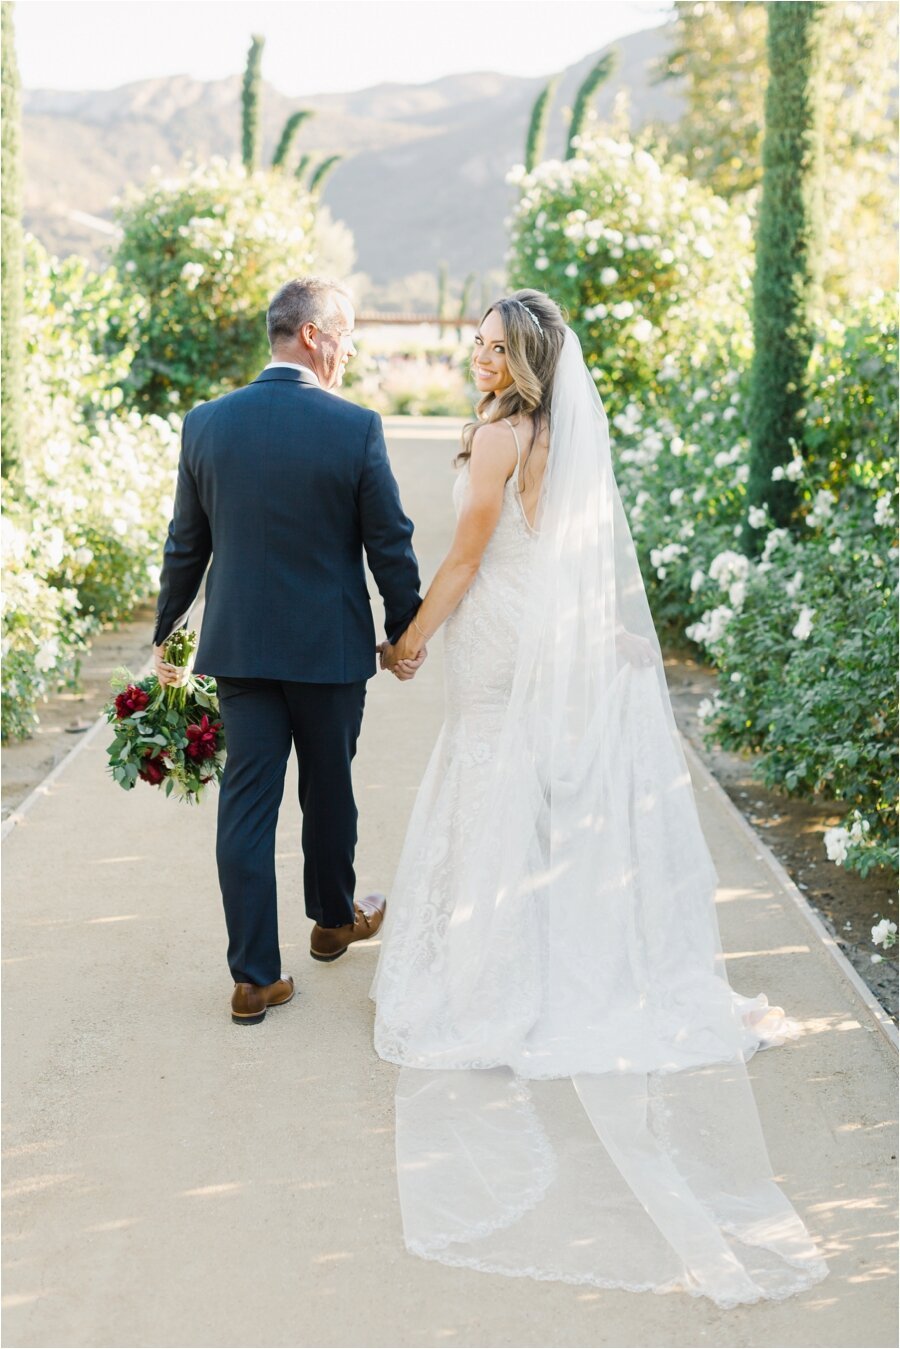 Bride and groom walk through vineyard together